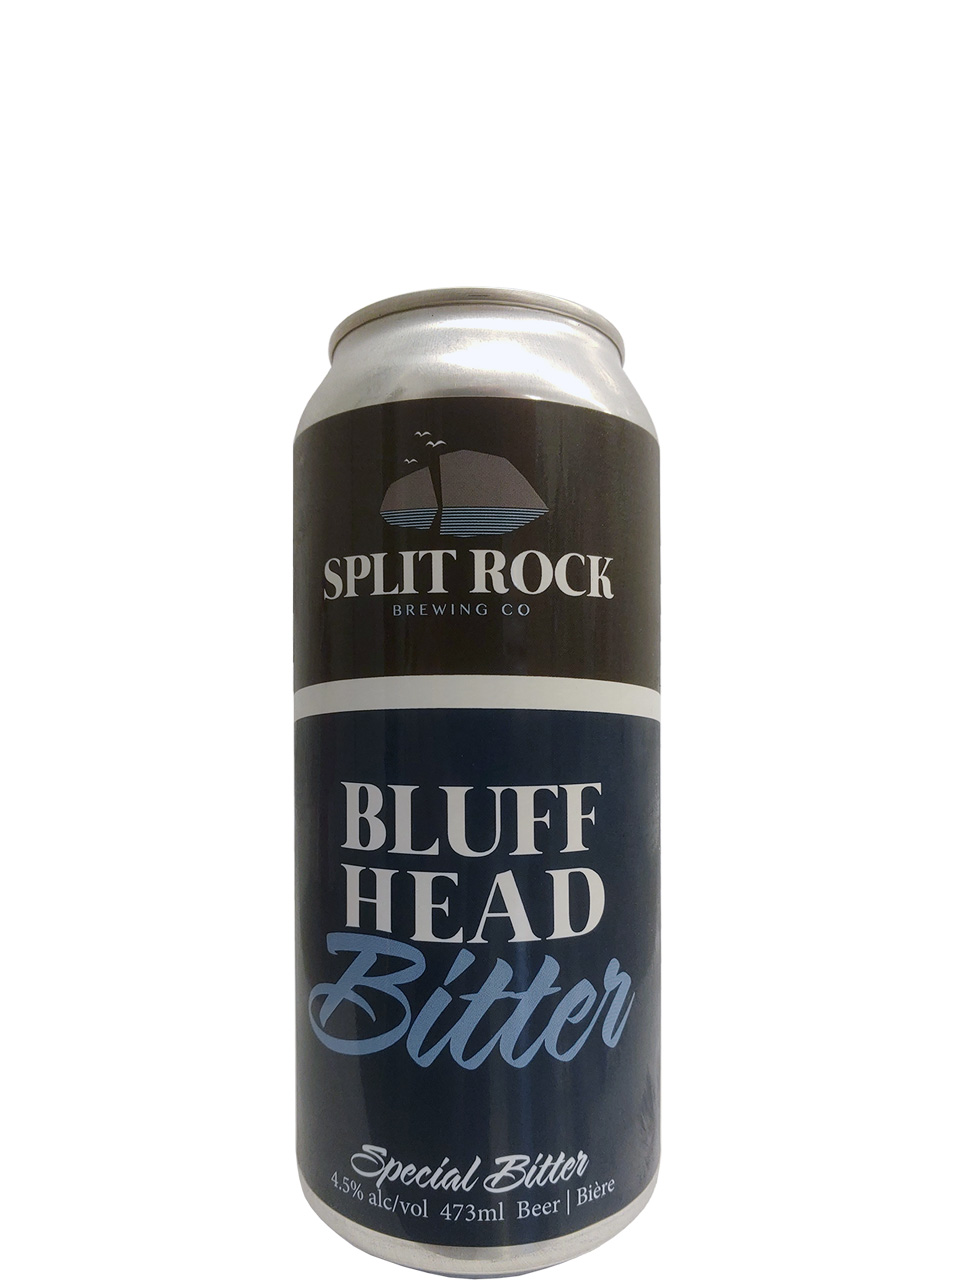 Split Rock Bluff Head Special Bitter 473ml Can